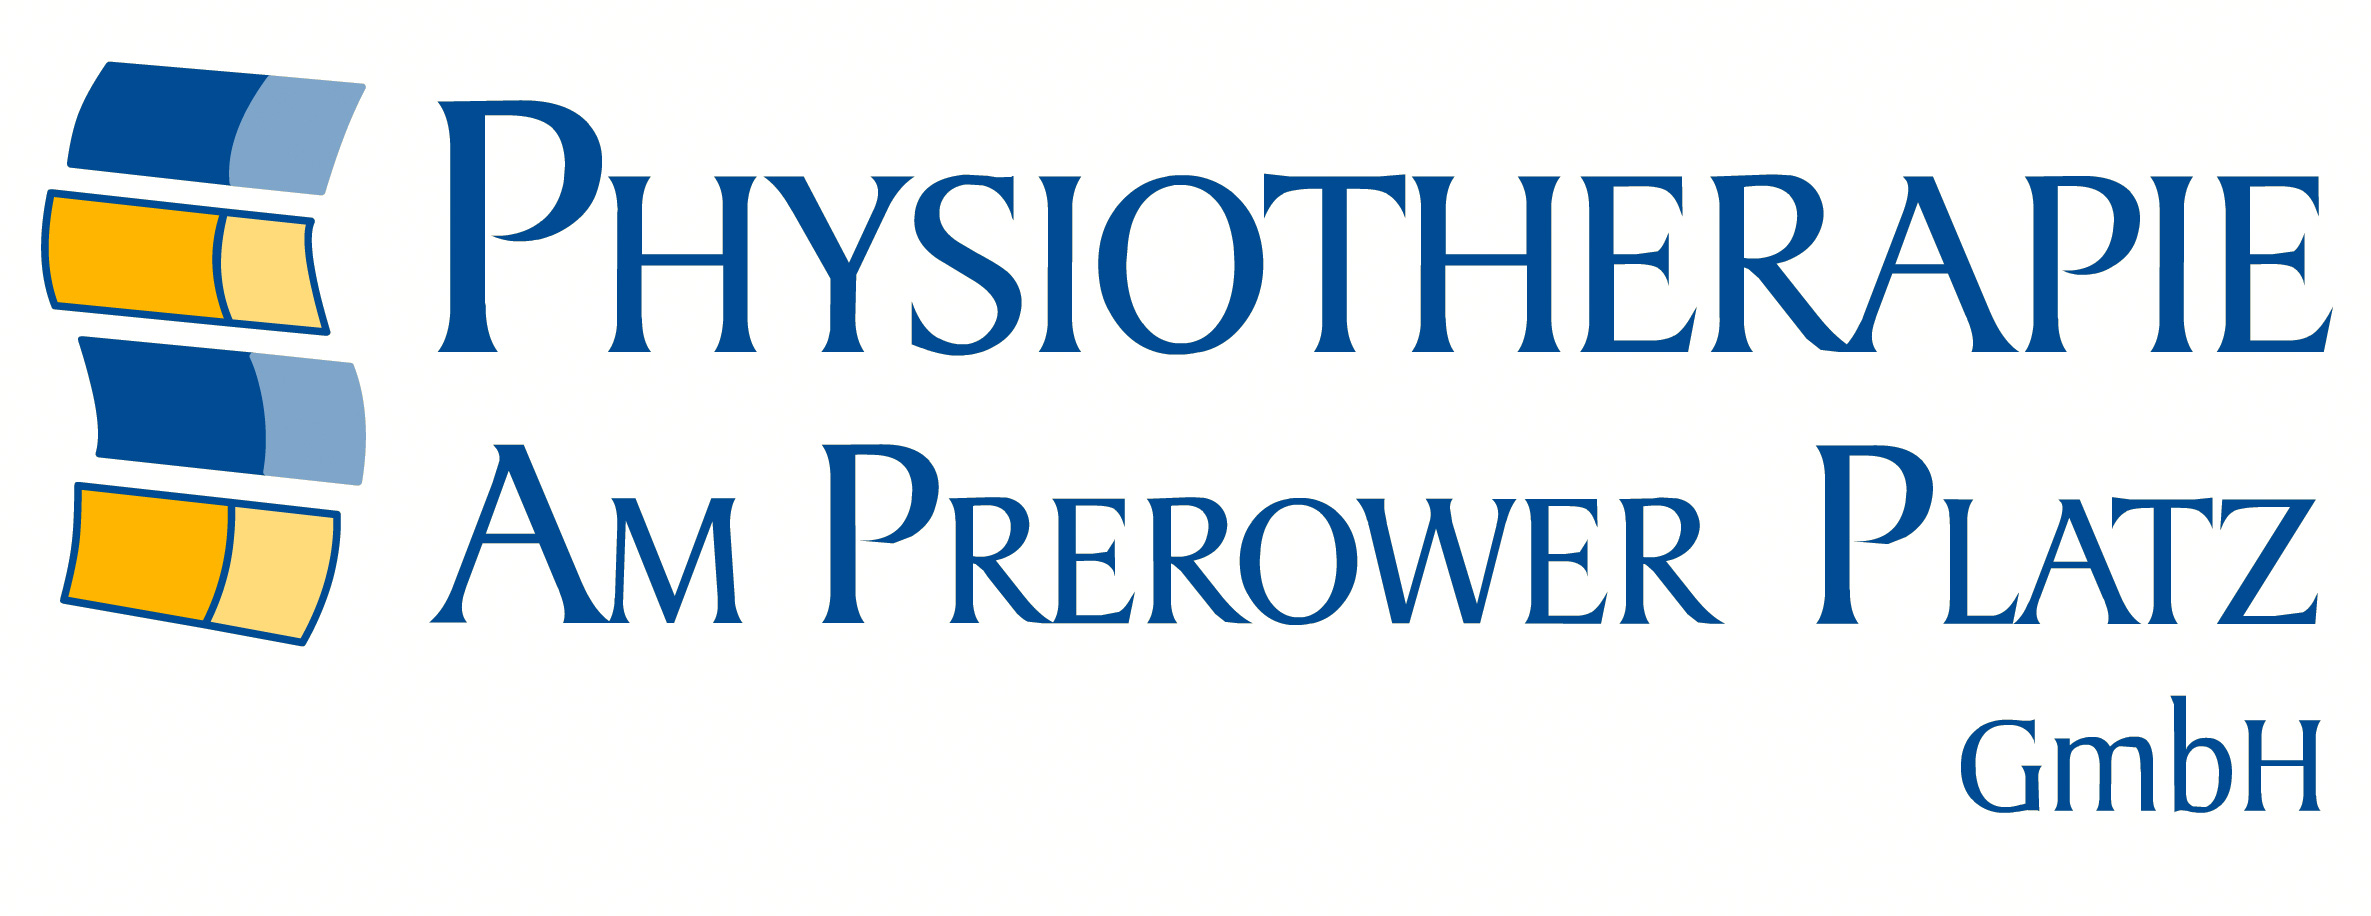 physiotherapie prerower platz logo hires